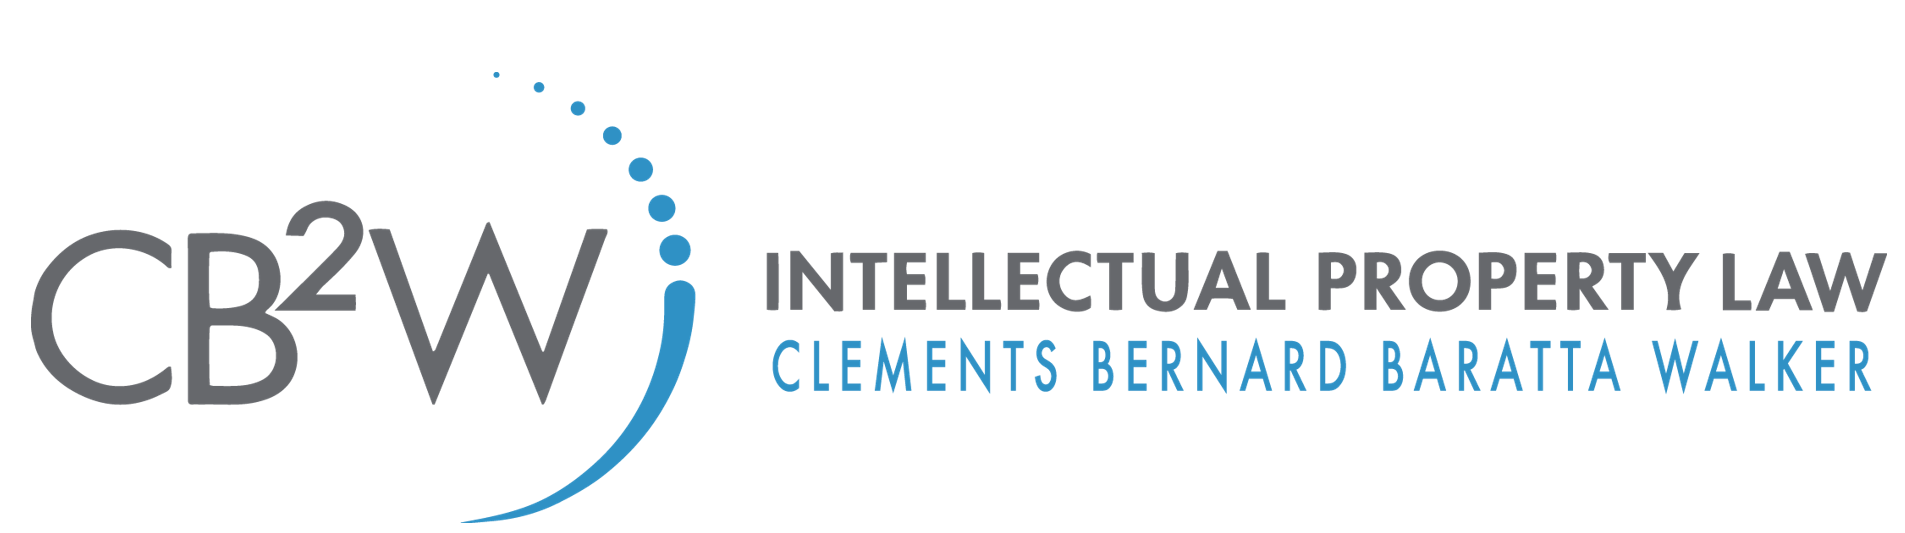 Clements Bernard Baratta Walker Patent Attorneys at Law